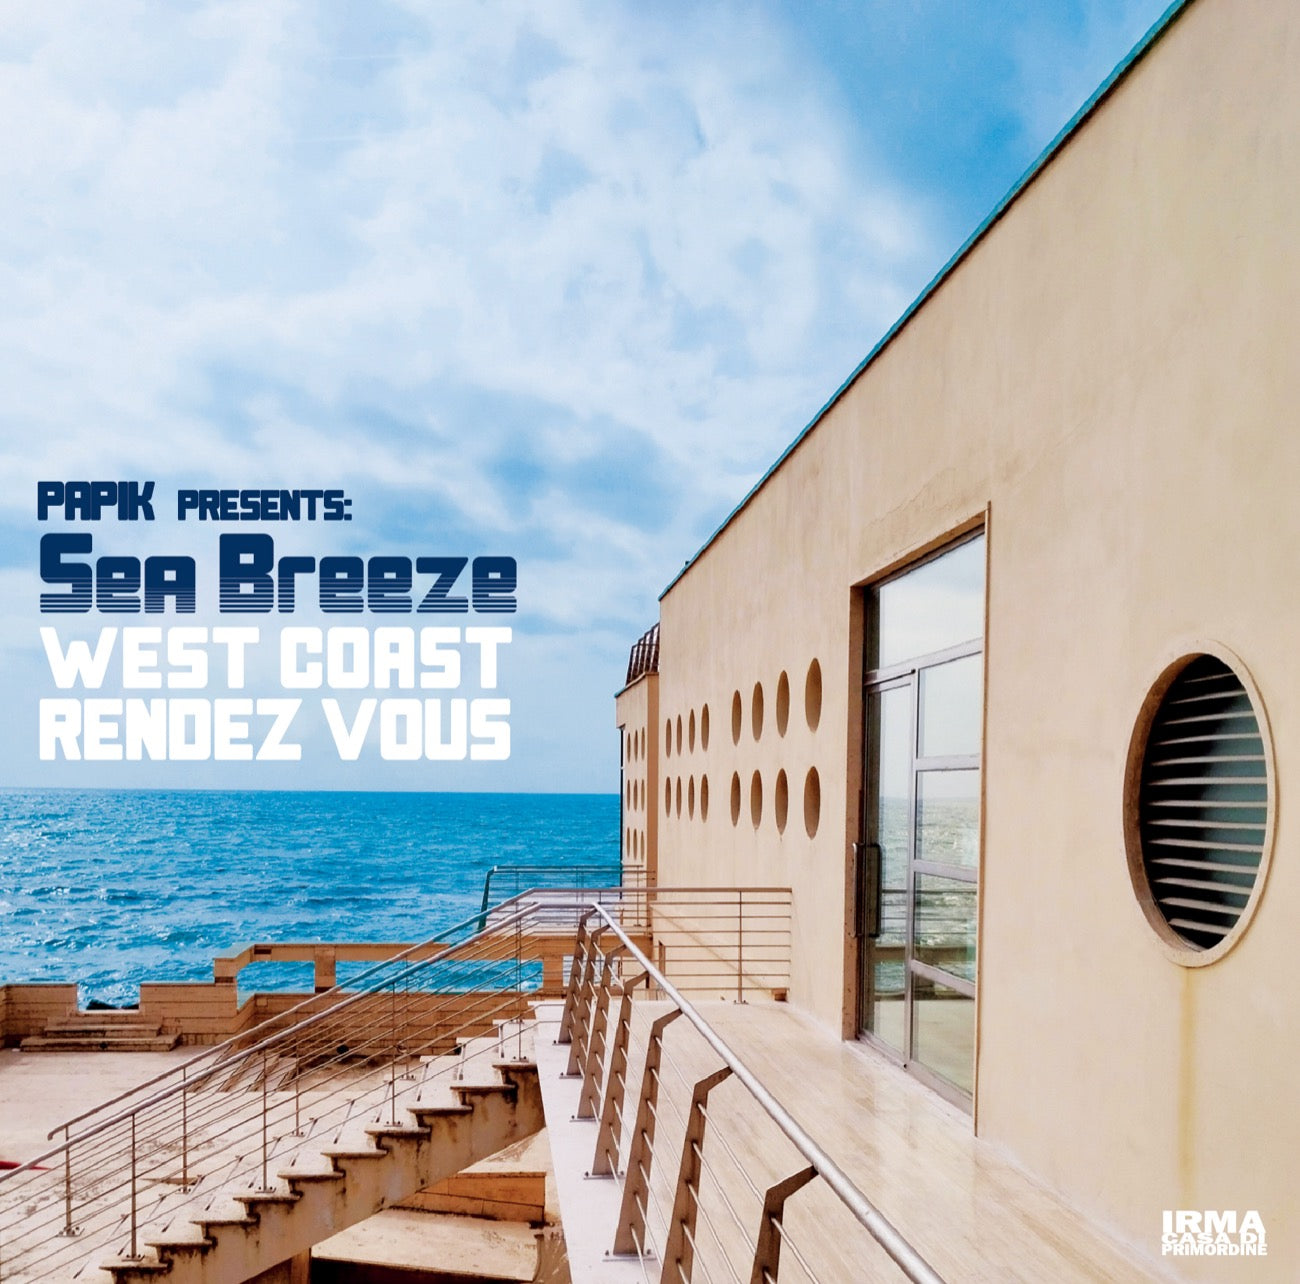 PAPIK presents SEA BREEZE 